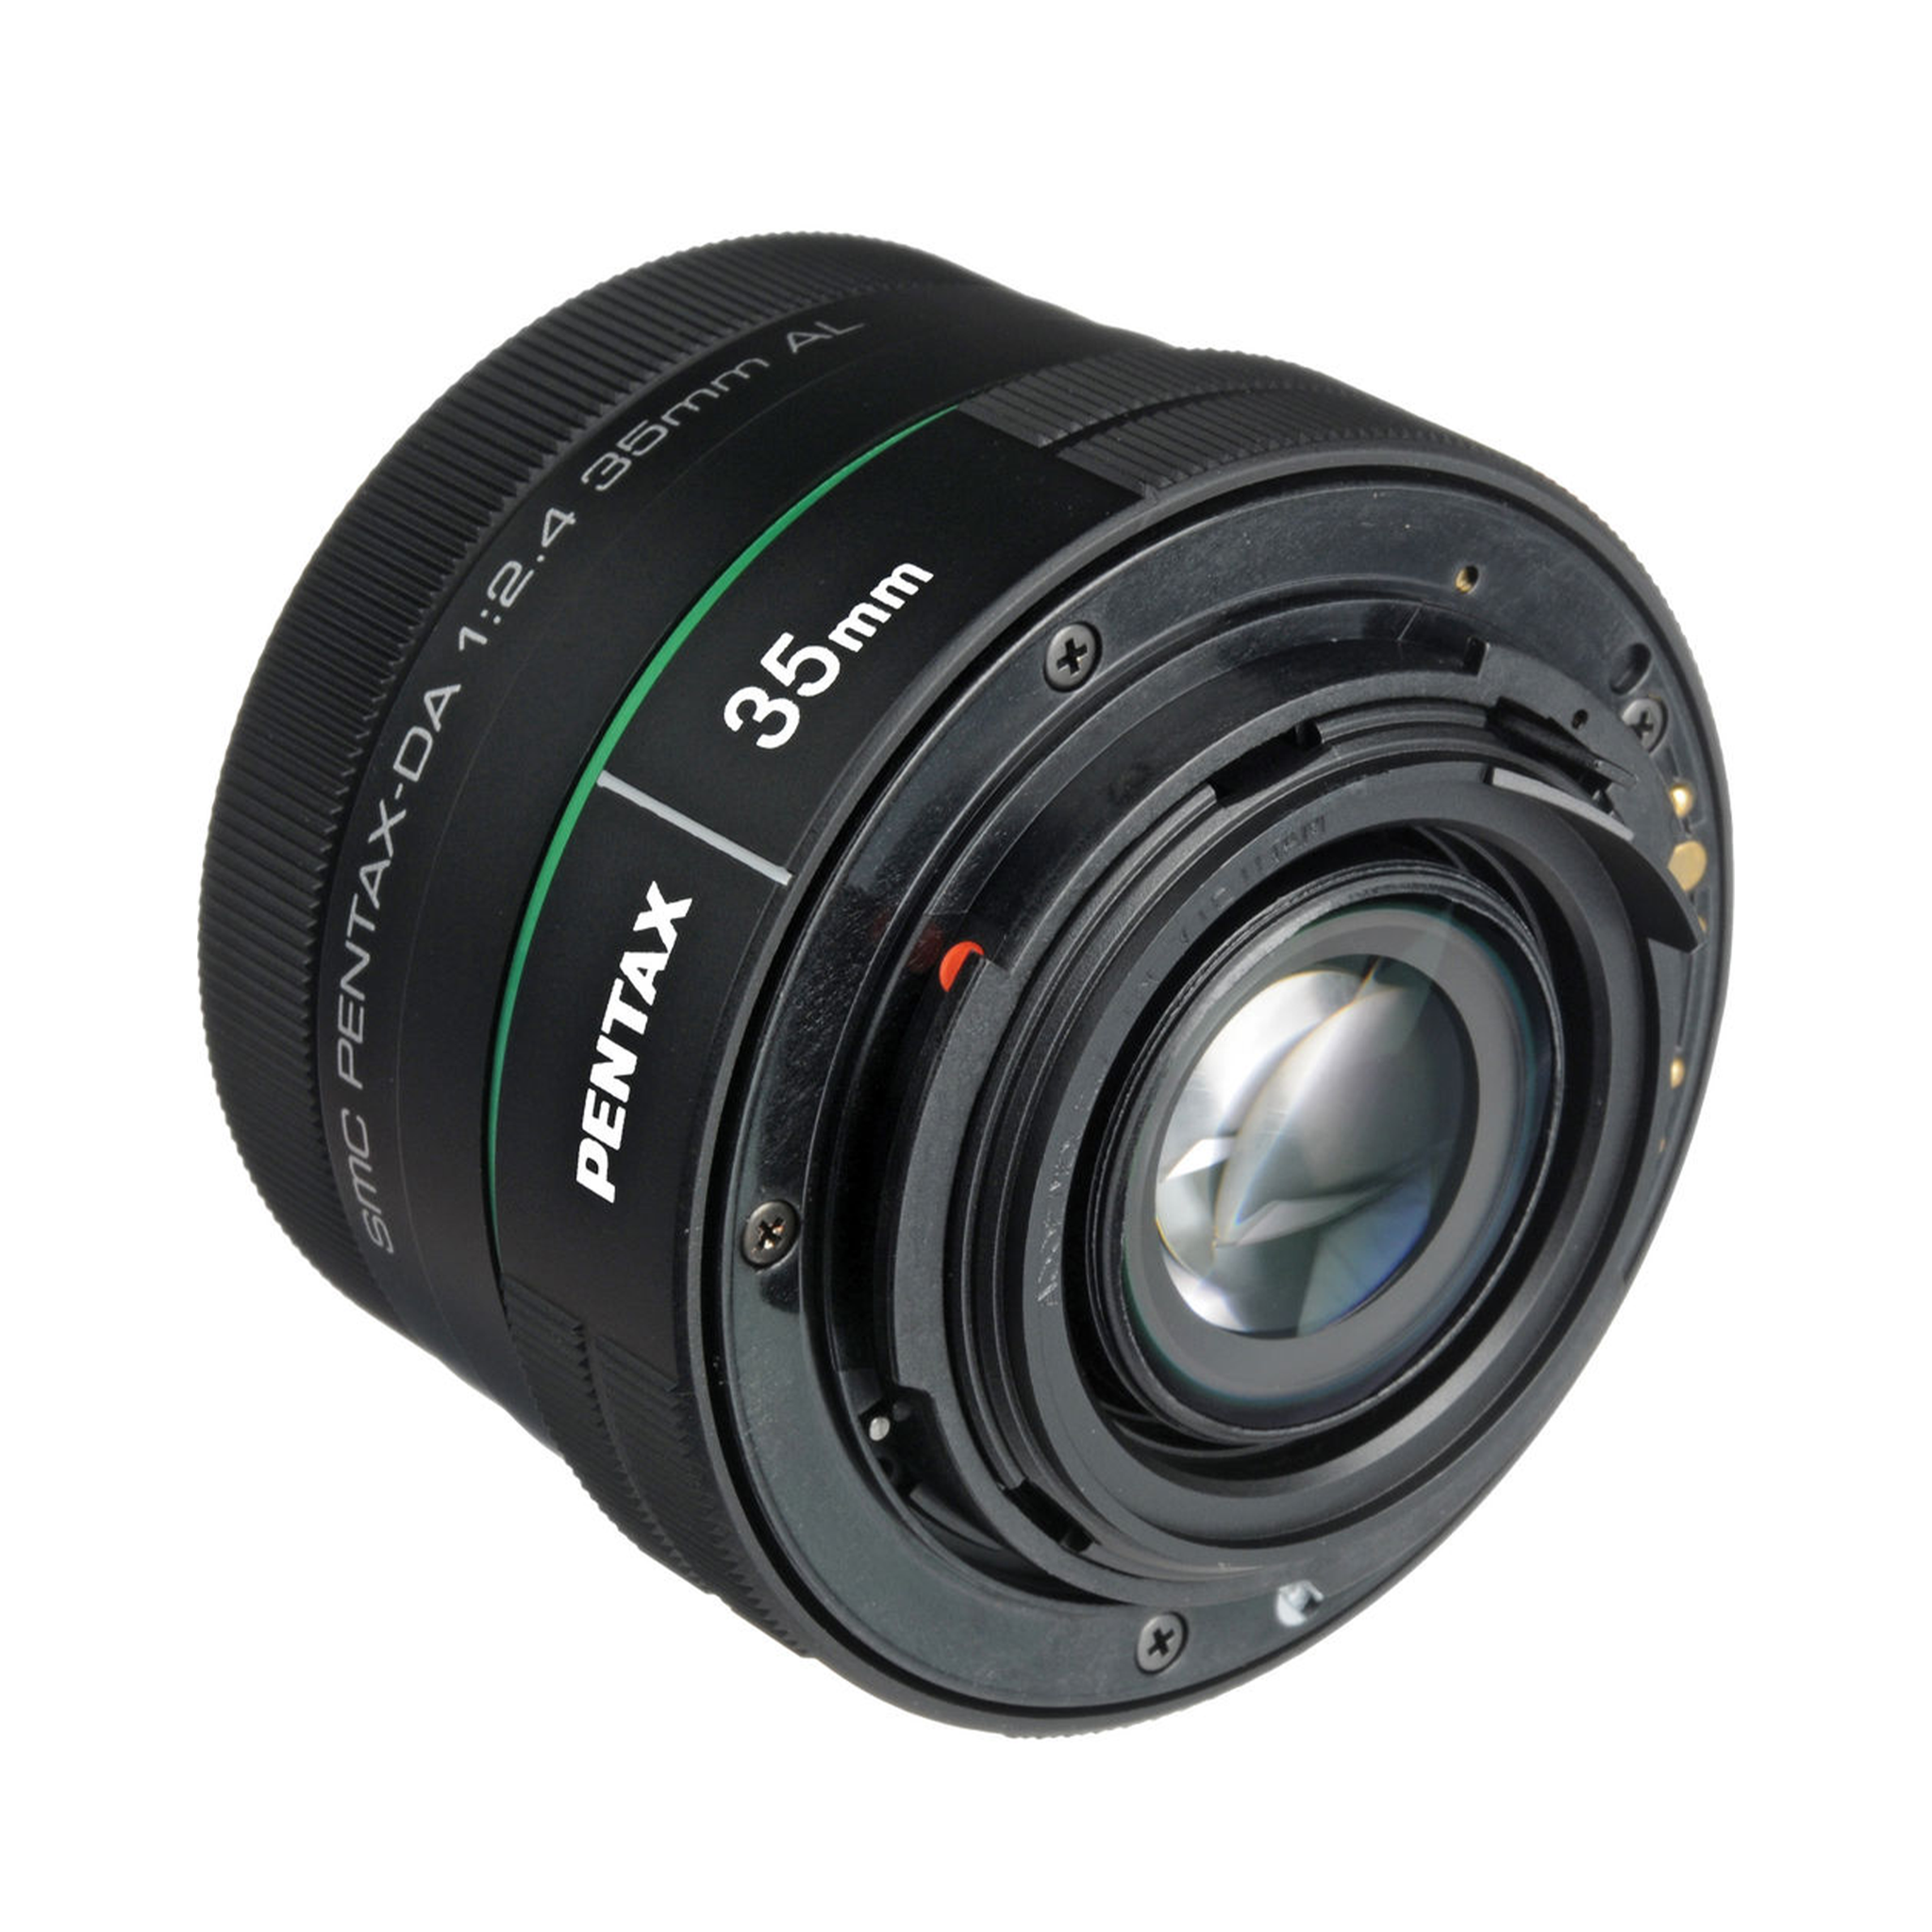 smc PENTAX-DA 35mmF2.4AL Lens – Tick Tech Go